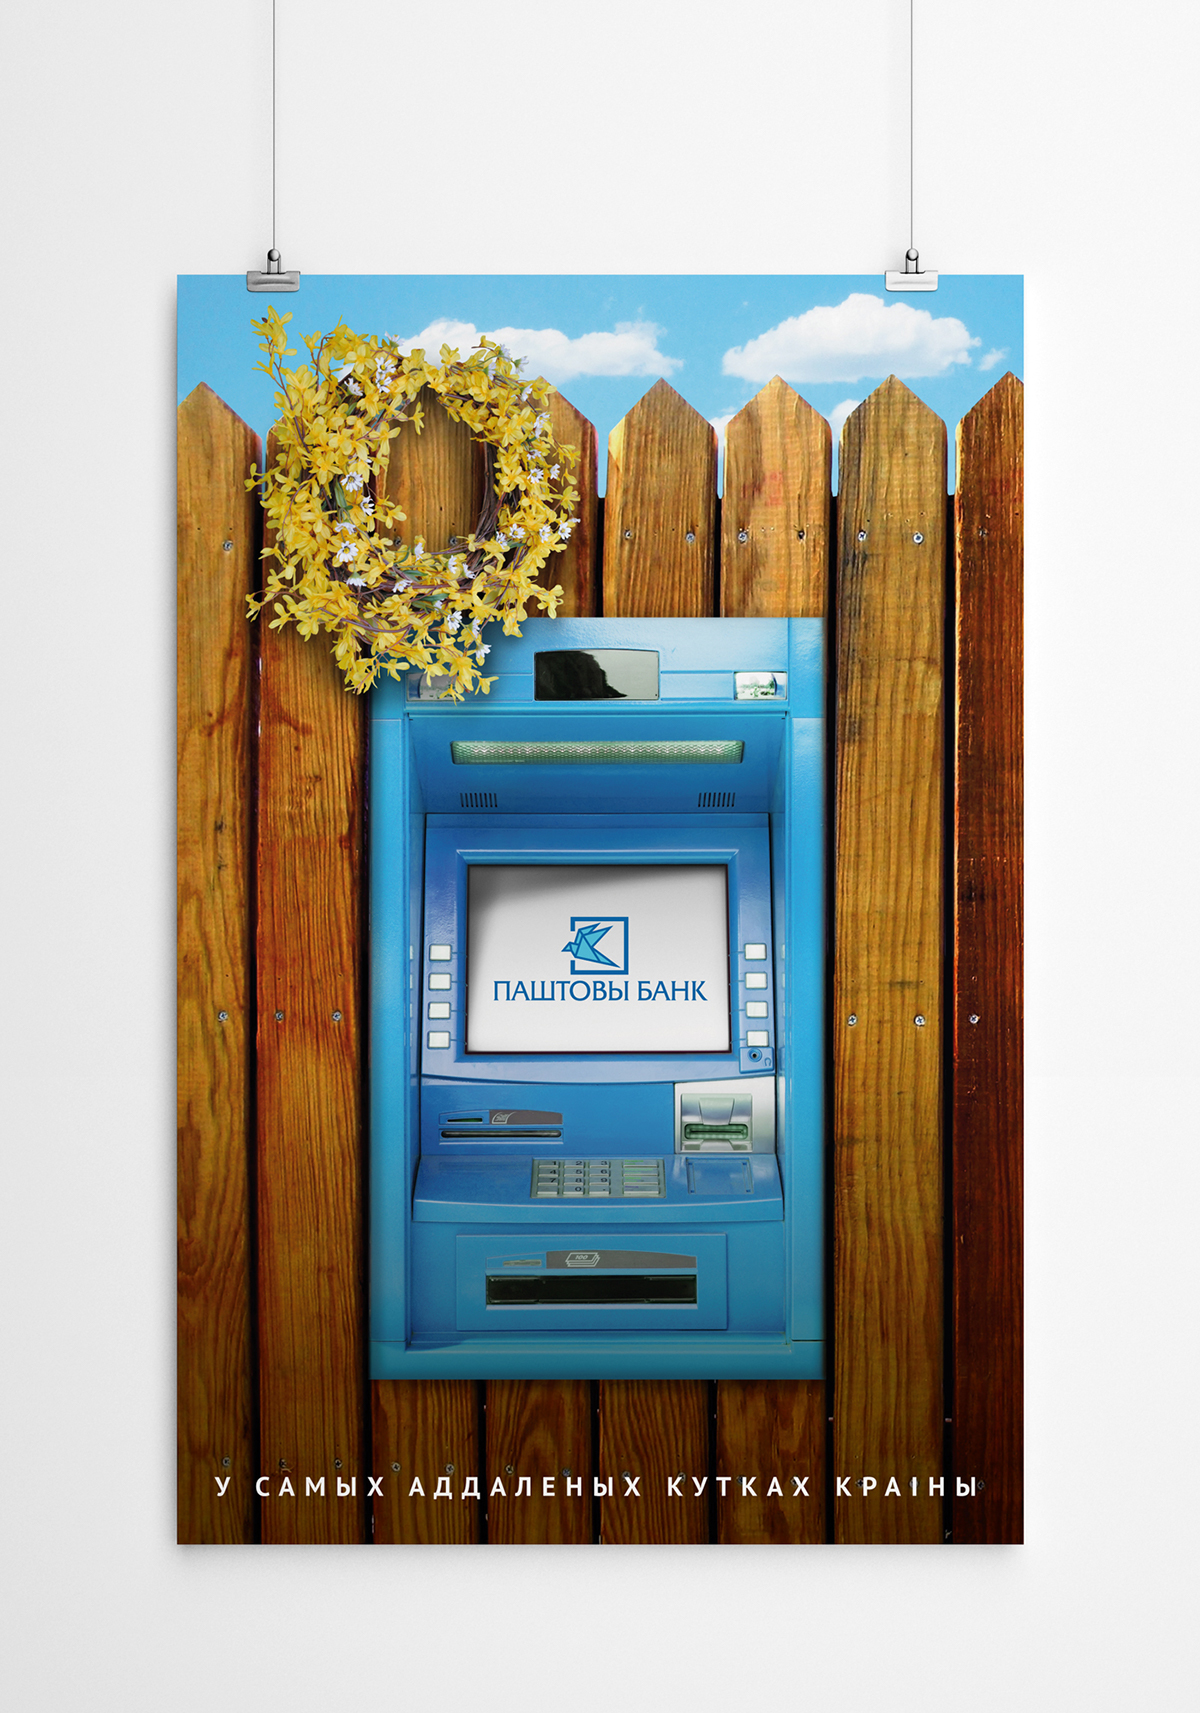 postal Bank poster bird money blue belarus corporate identiy logo ATM creative Style success SKY